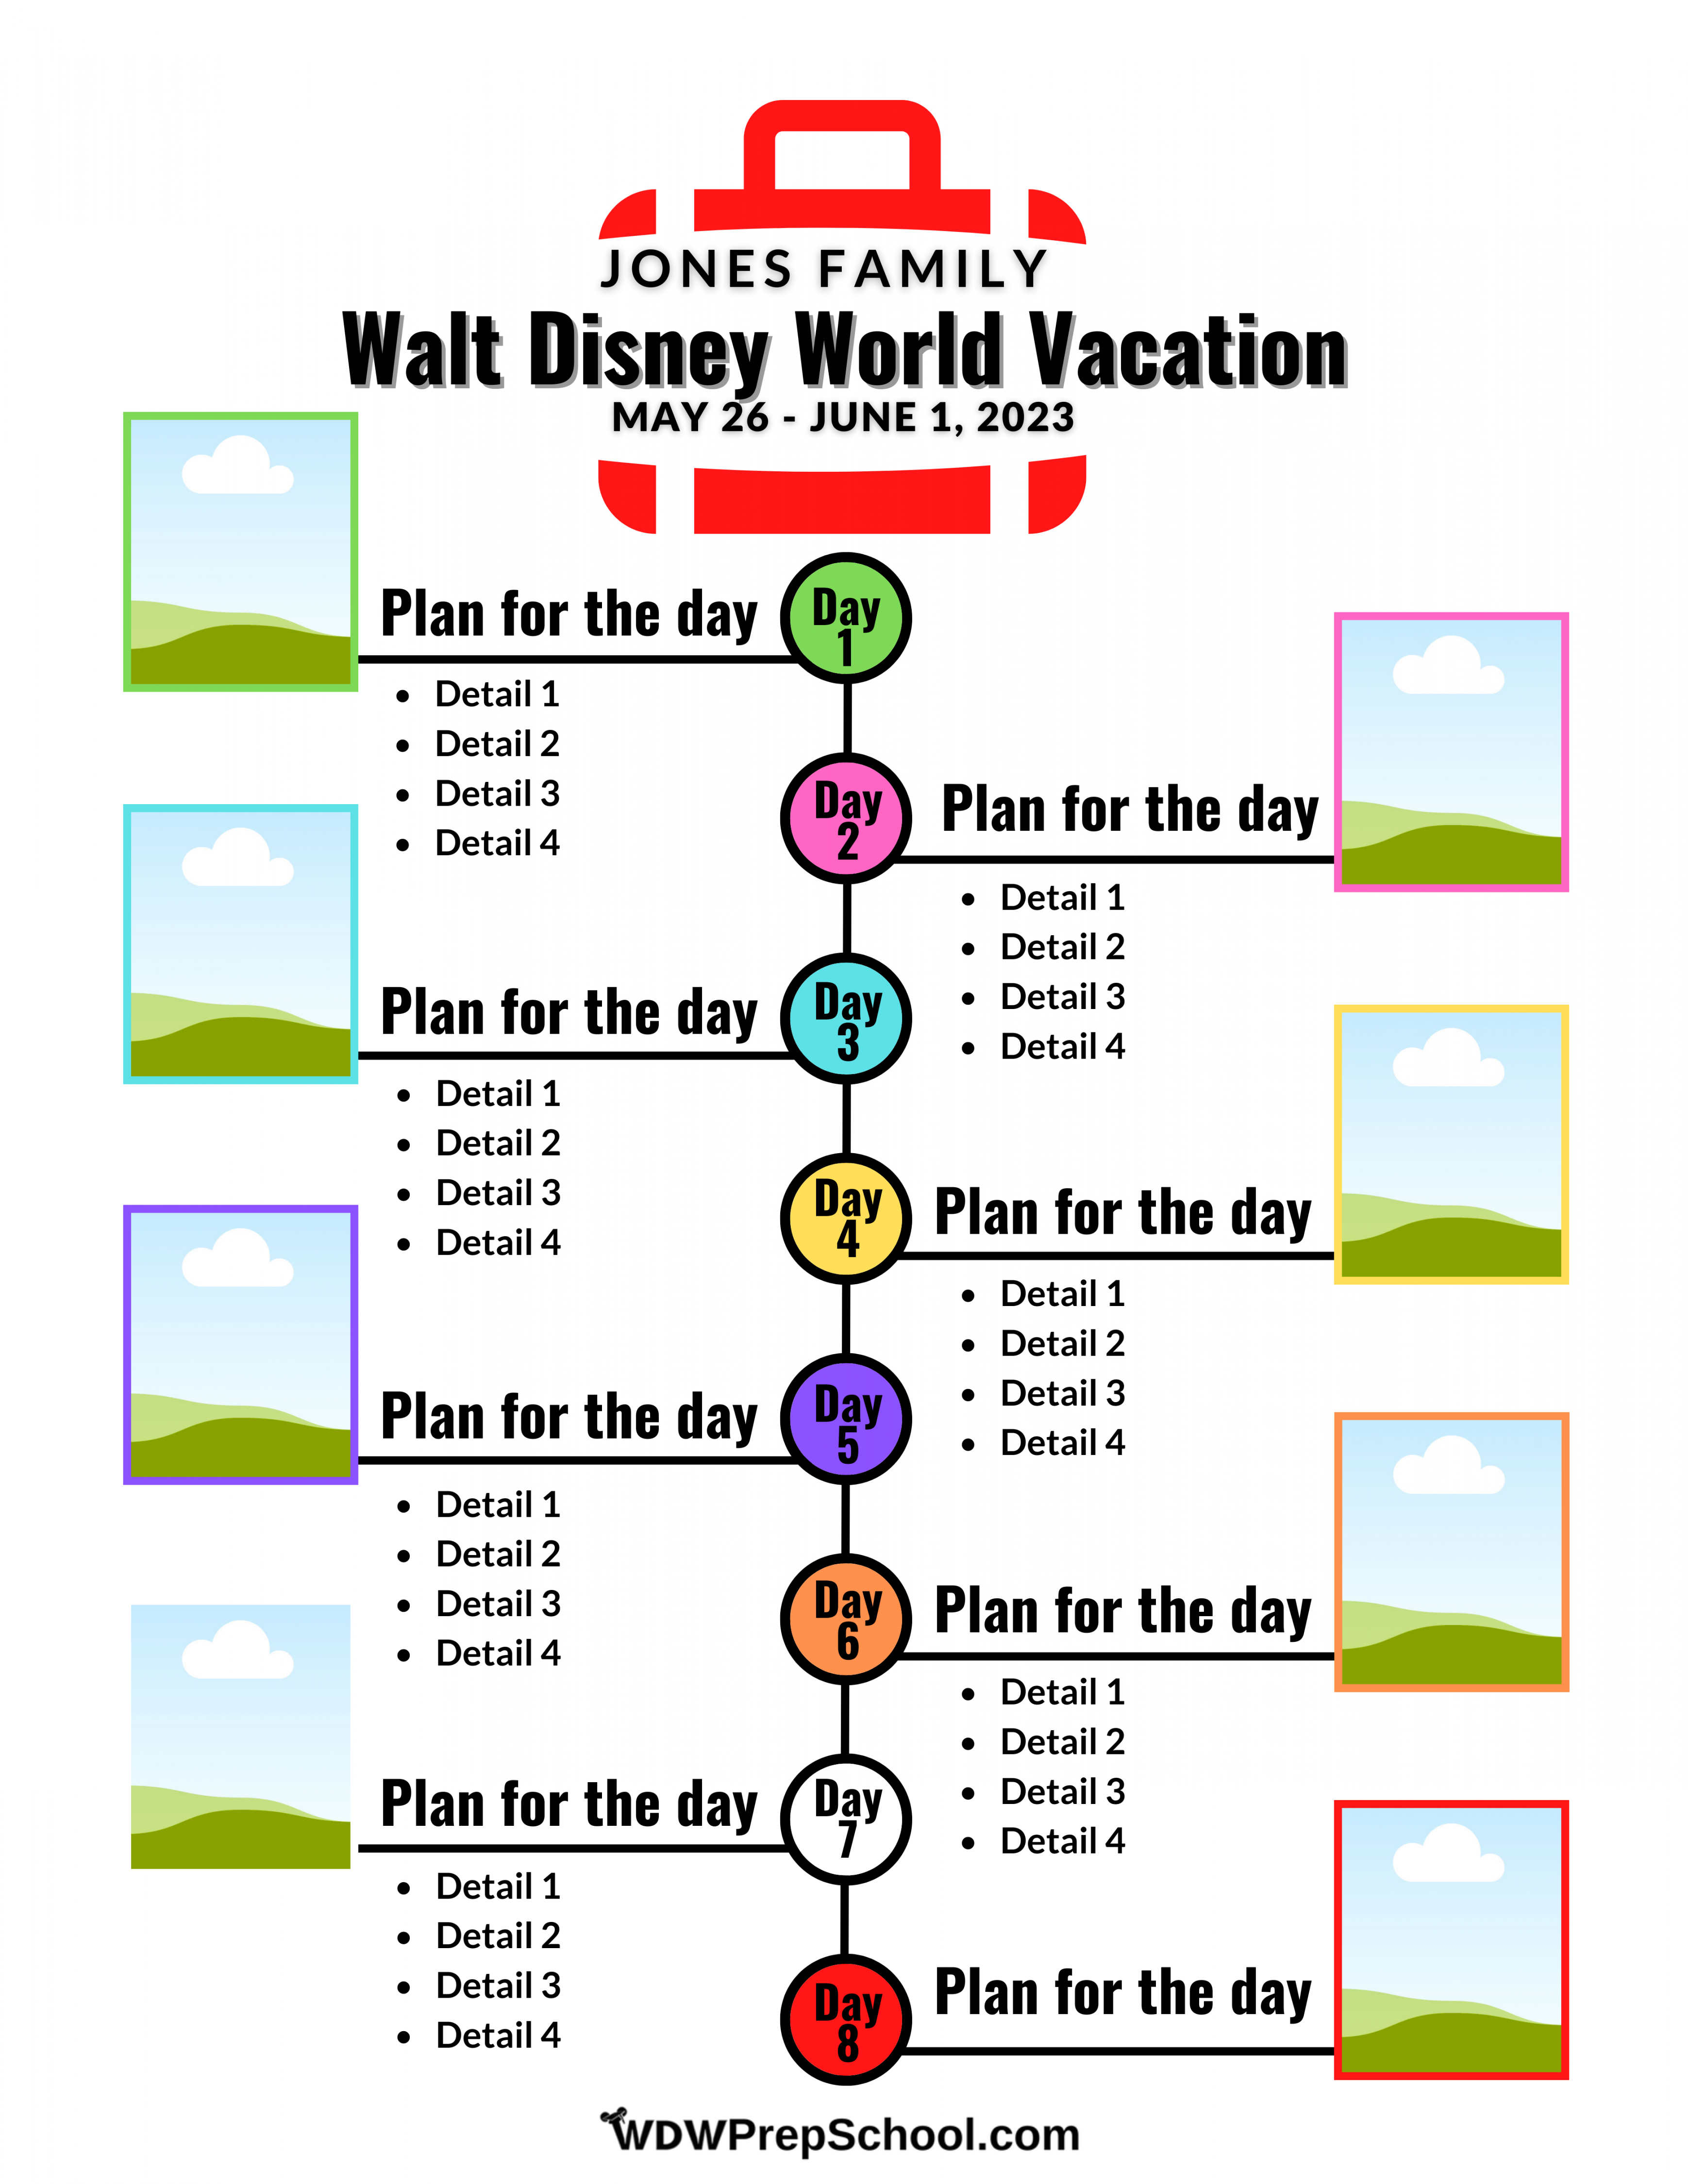 FREE Custom Disney World Itinerary Templates - WDW Prep School